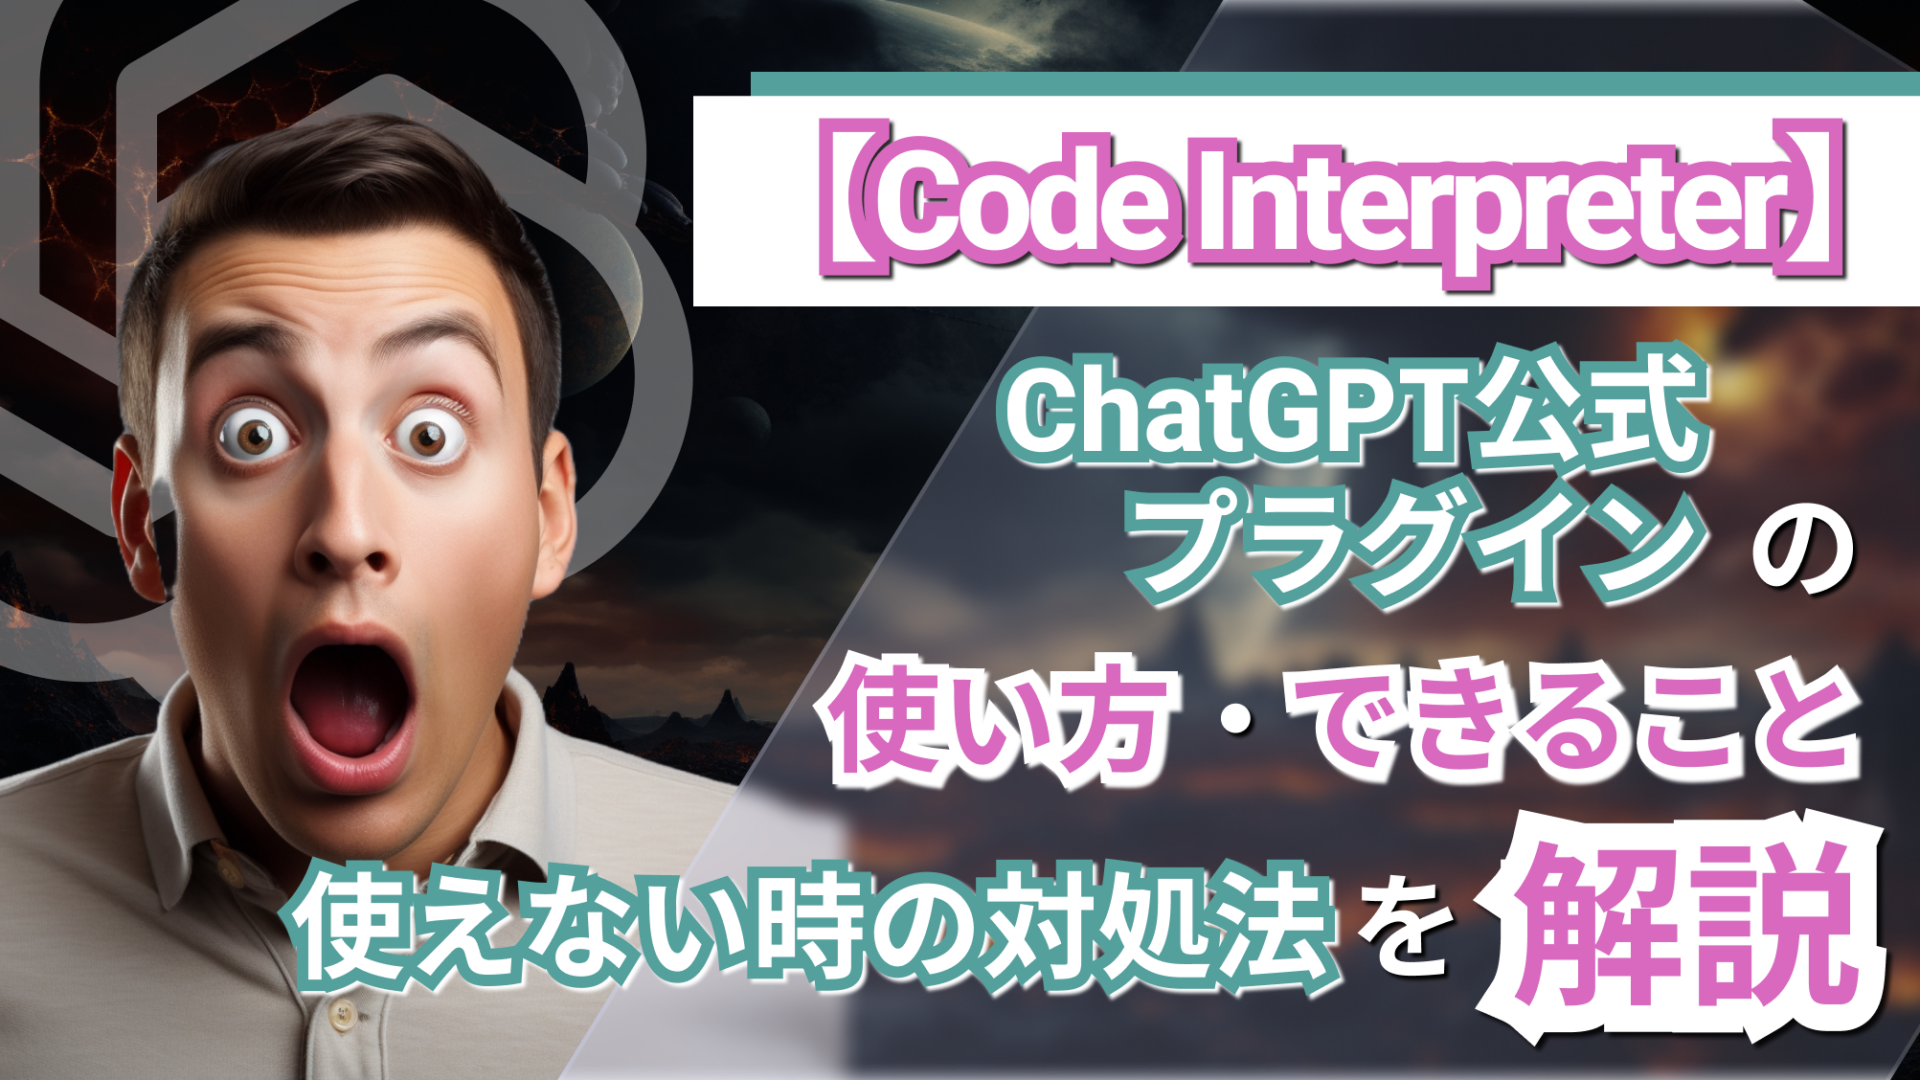 ChatGPT codeinterpreter 解説